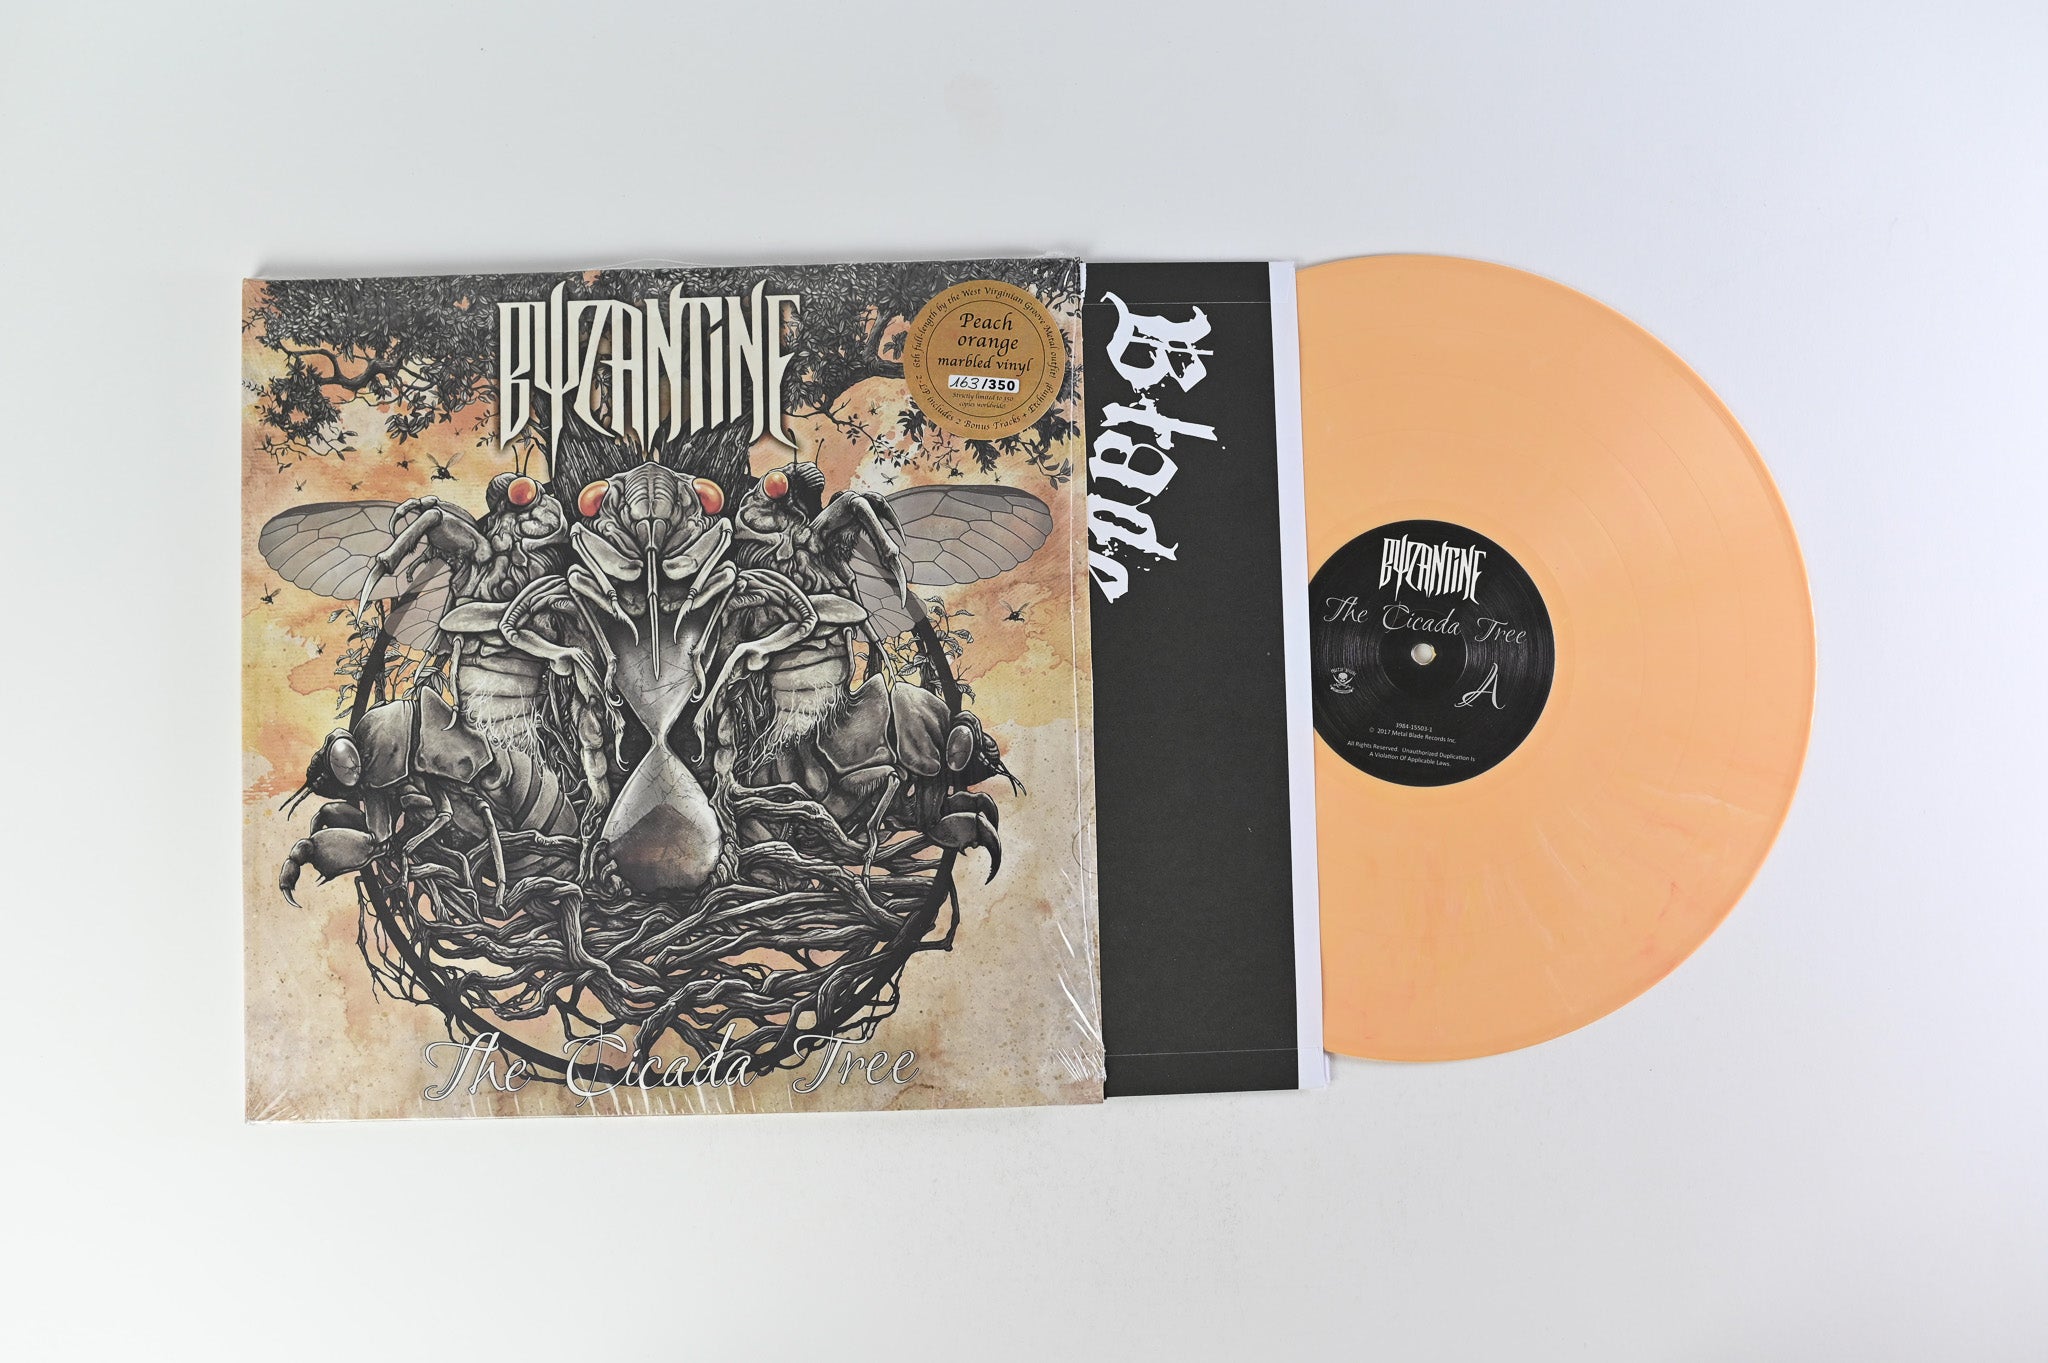 Byzantine - The Cicada Tree on Metal Blade Records Peach Orange Marbled Vinyl